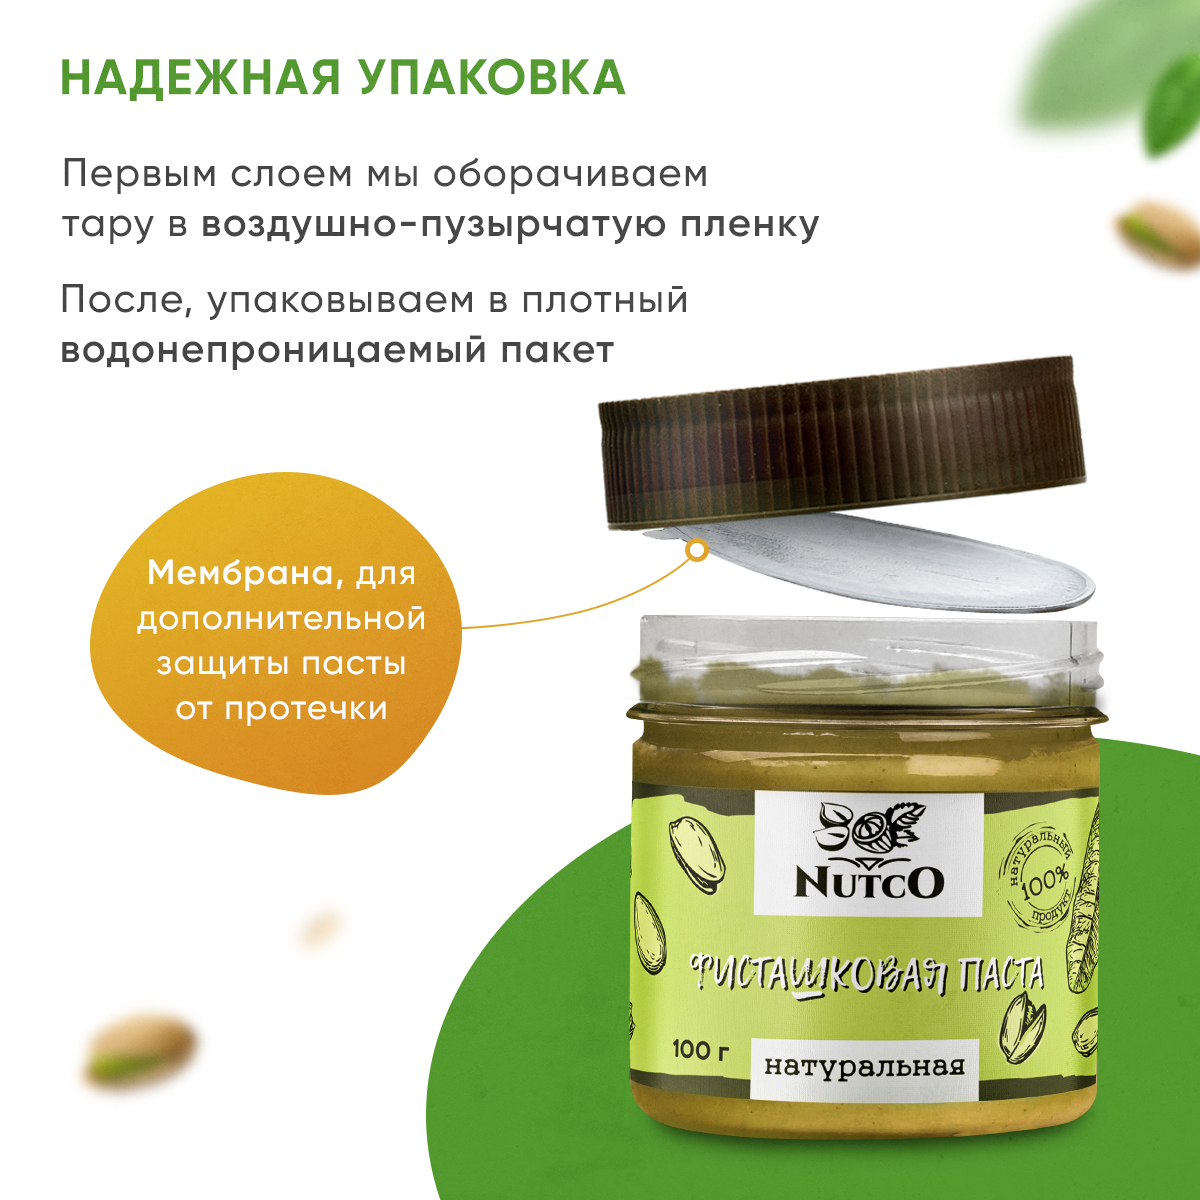 Фисташковая паста Nutco натуральная без сахара без добавок 100 г - фото 5